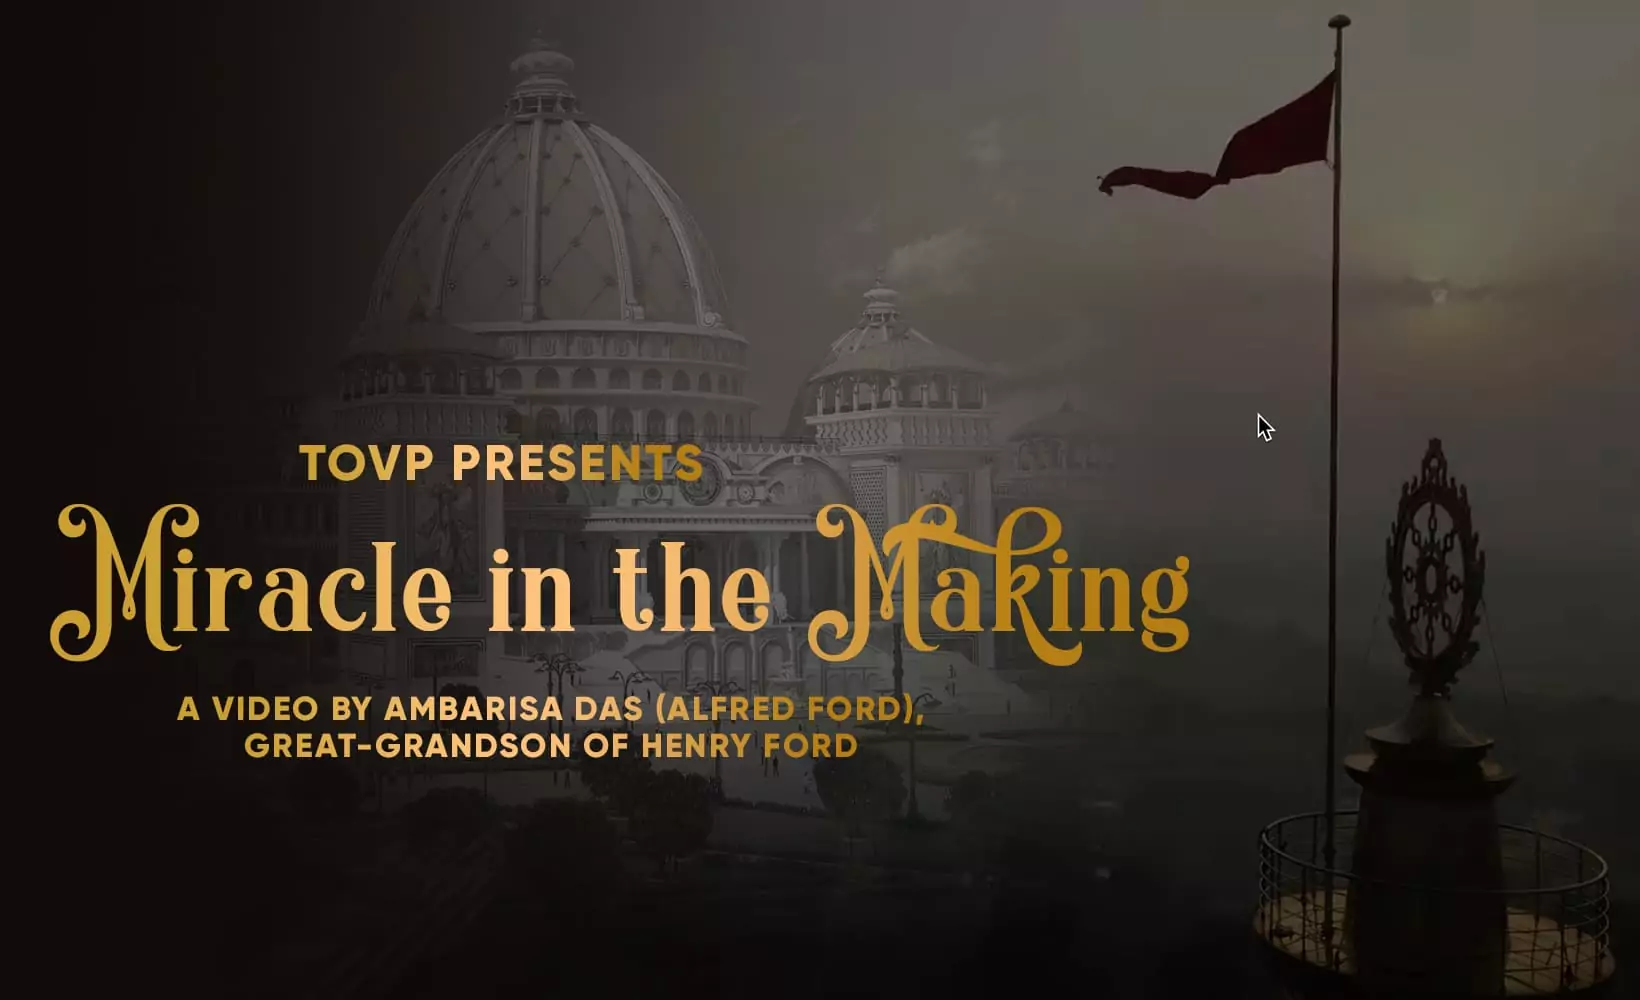 TOVP presenta - Milagro en proceso: un video de Ambarisa Das (Alfred Ford), bisnieto de Henry Ford